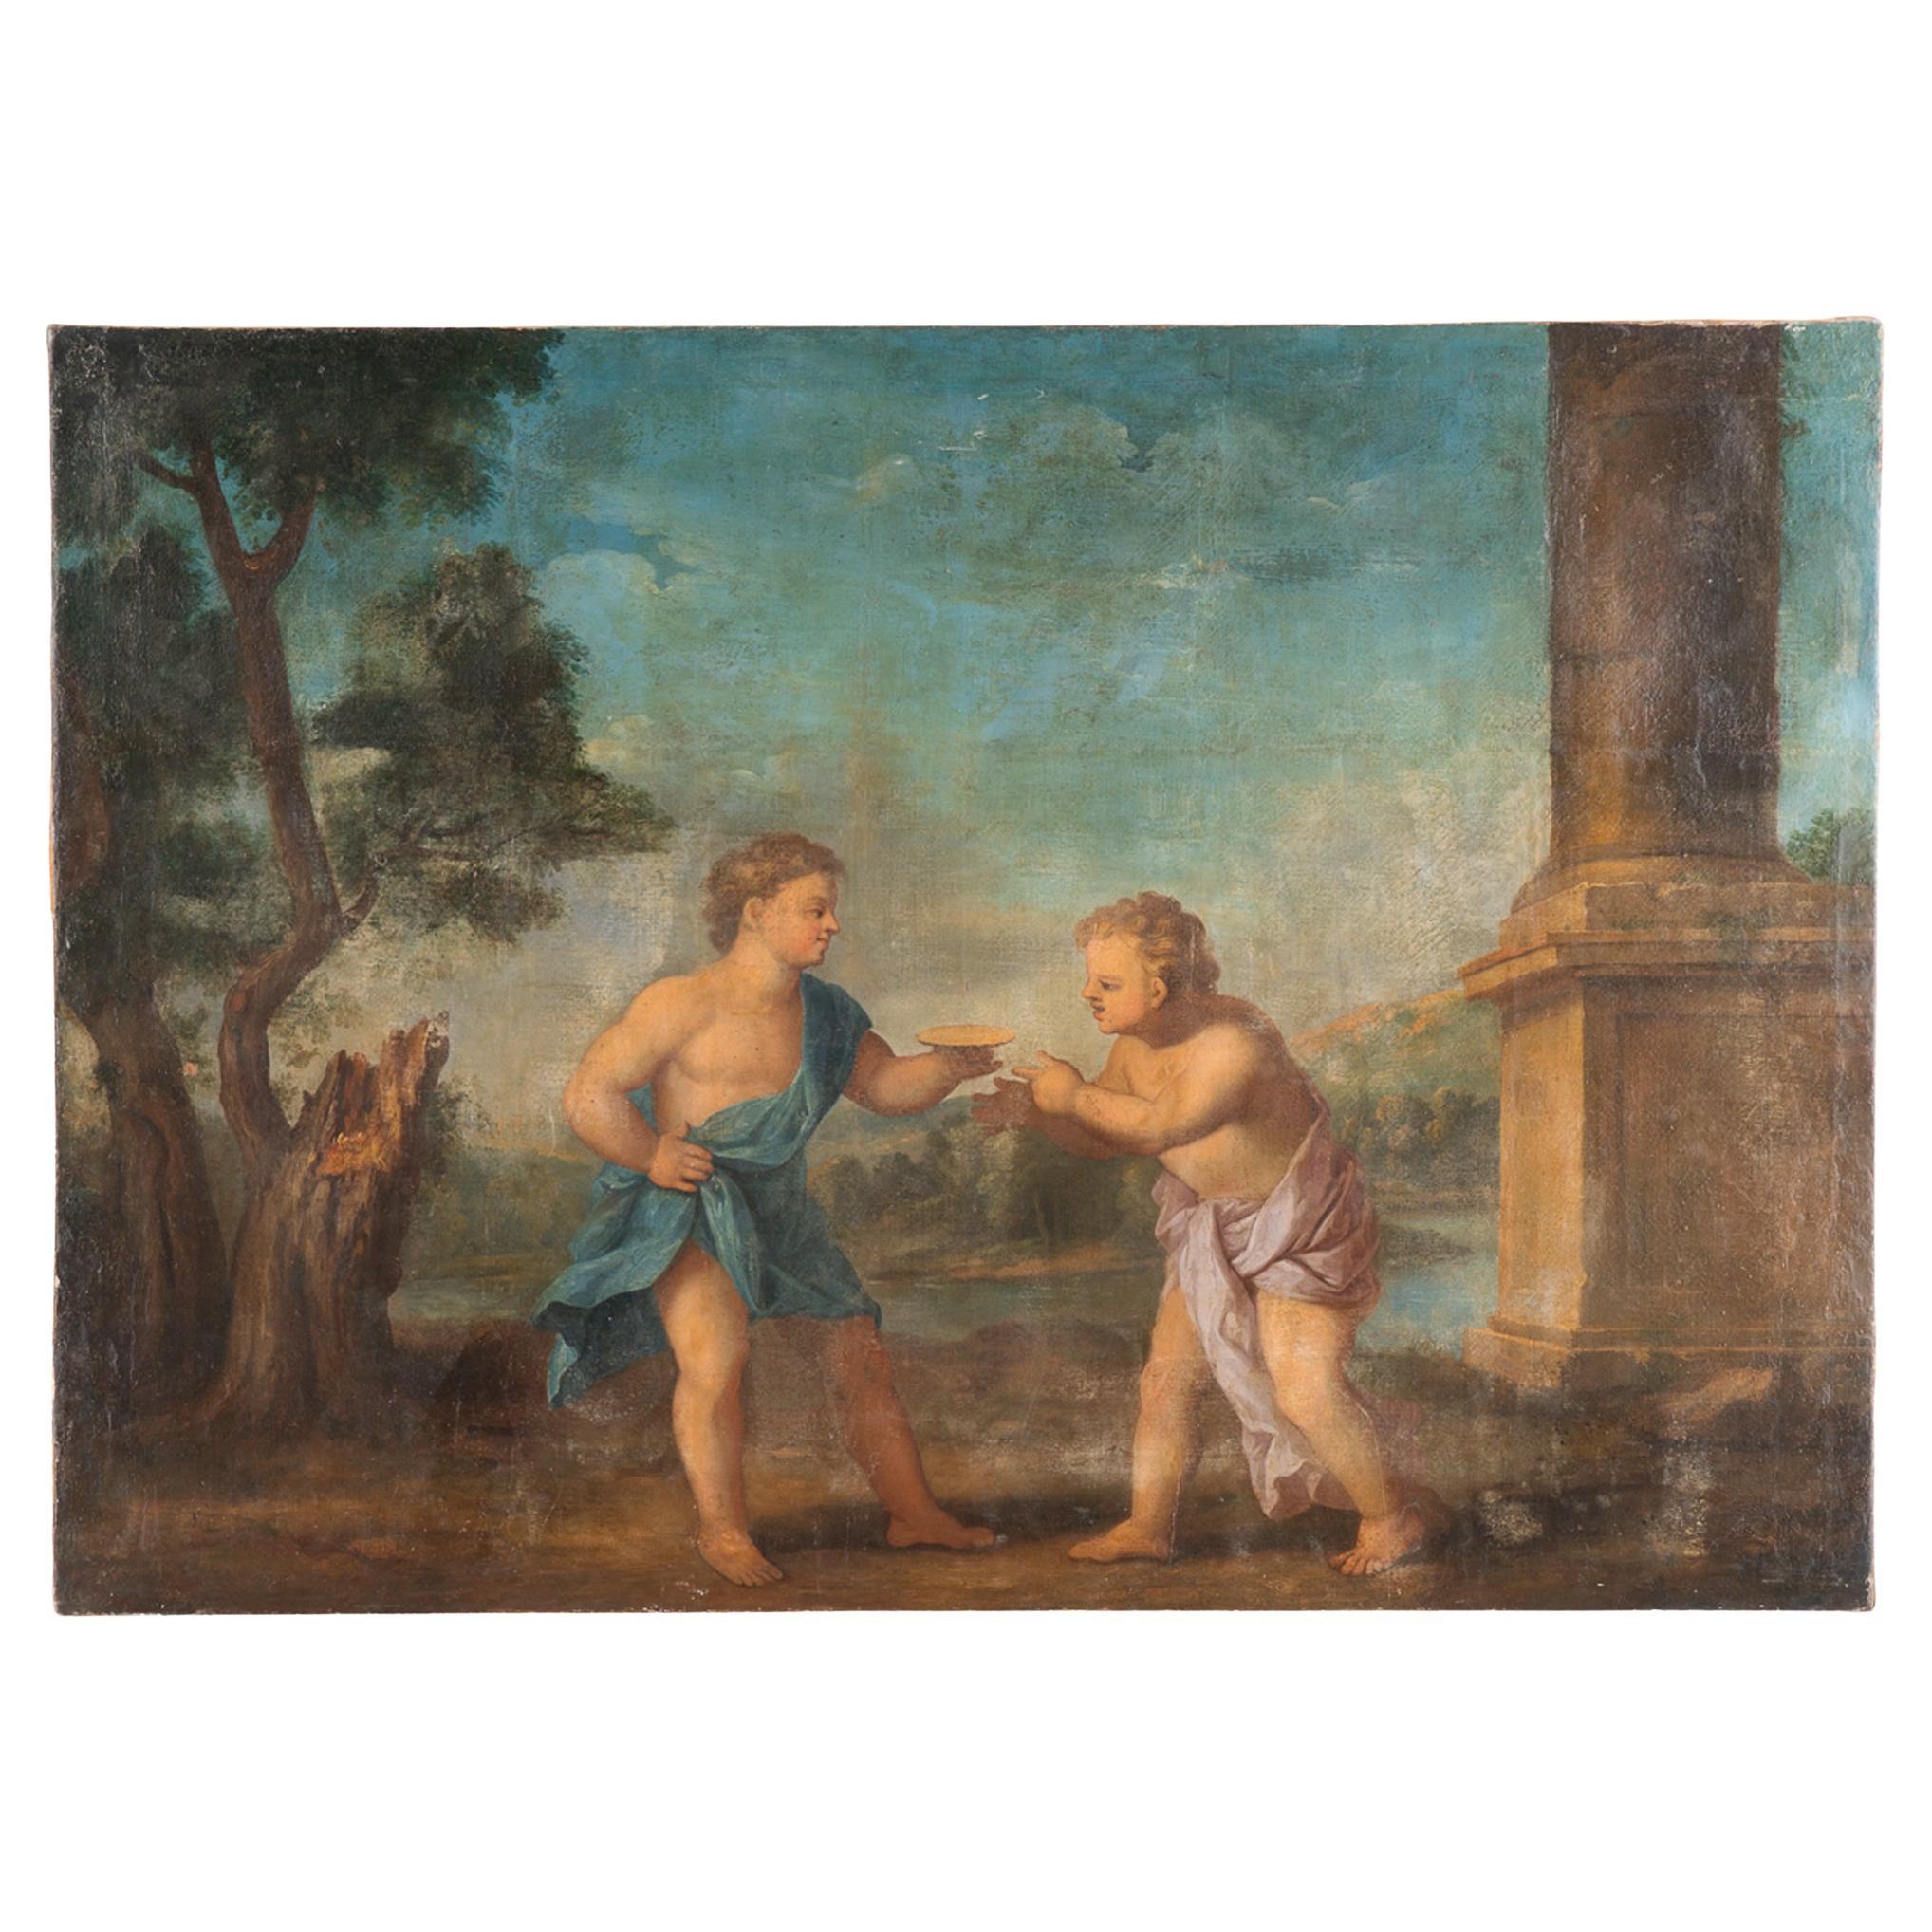 Original Oil On Canvas Allegorical Scene, Italian School circa 1800